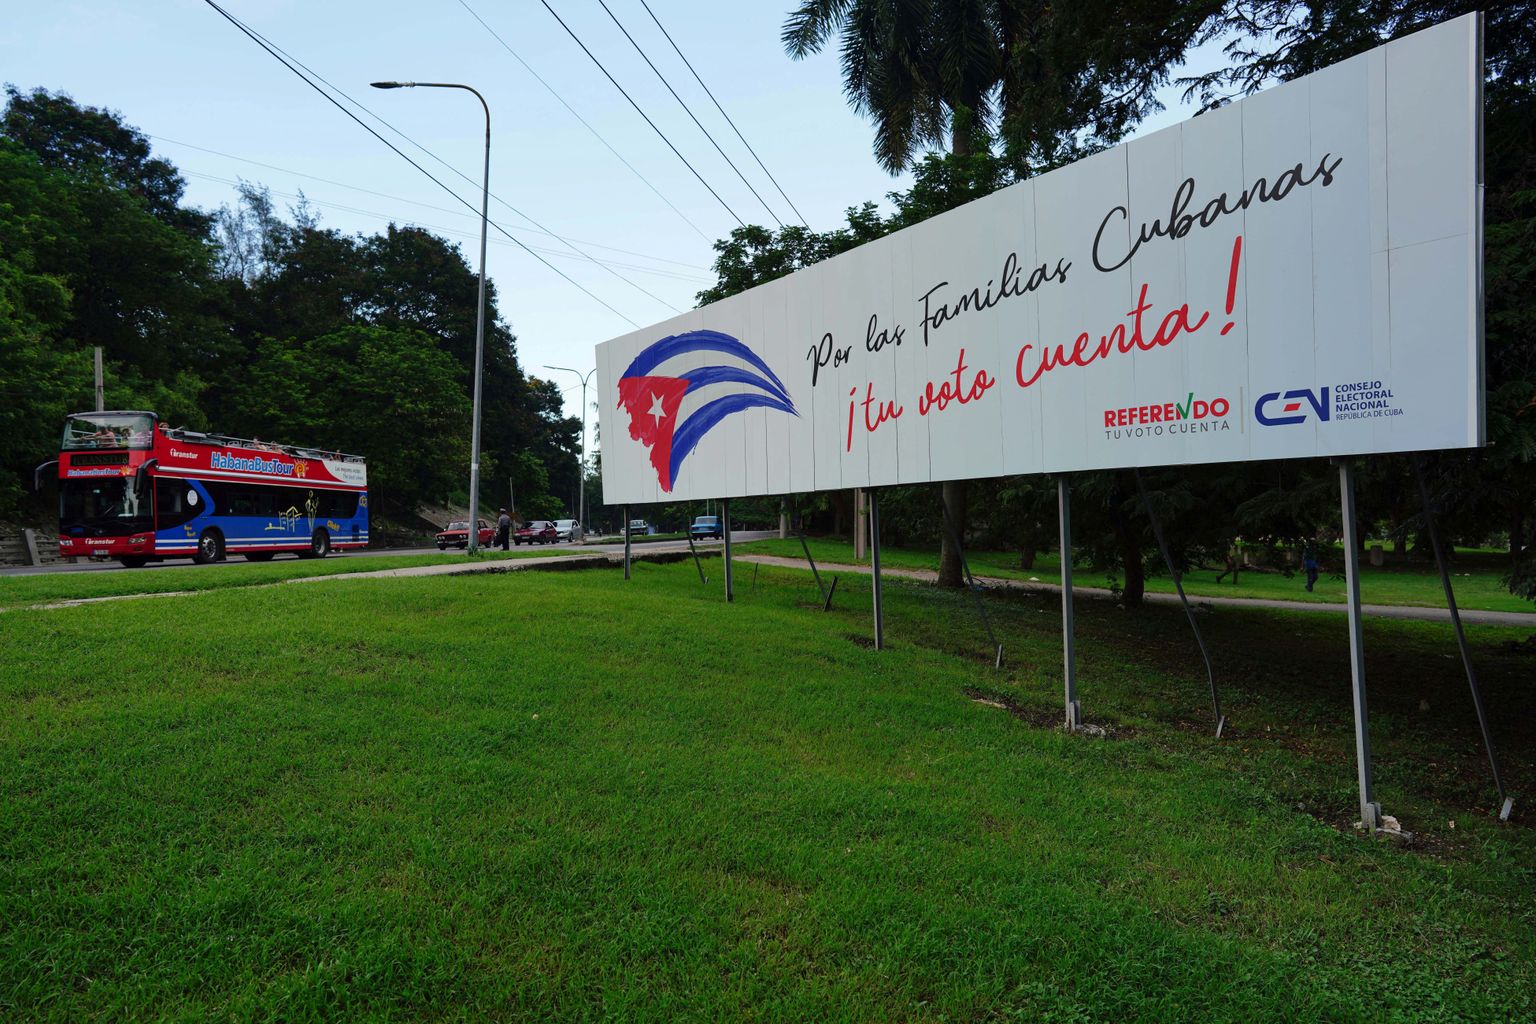 Referendumile kutsuv plakat Kuubal.